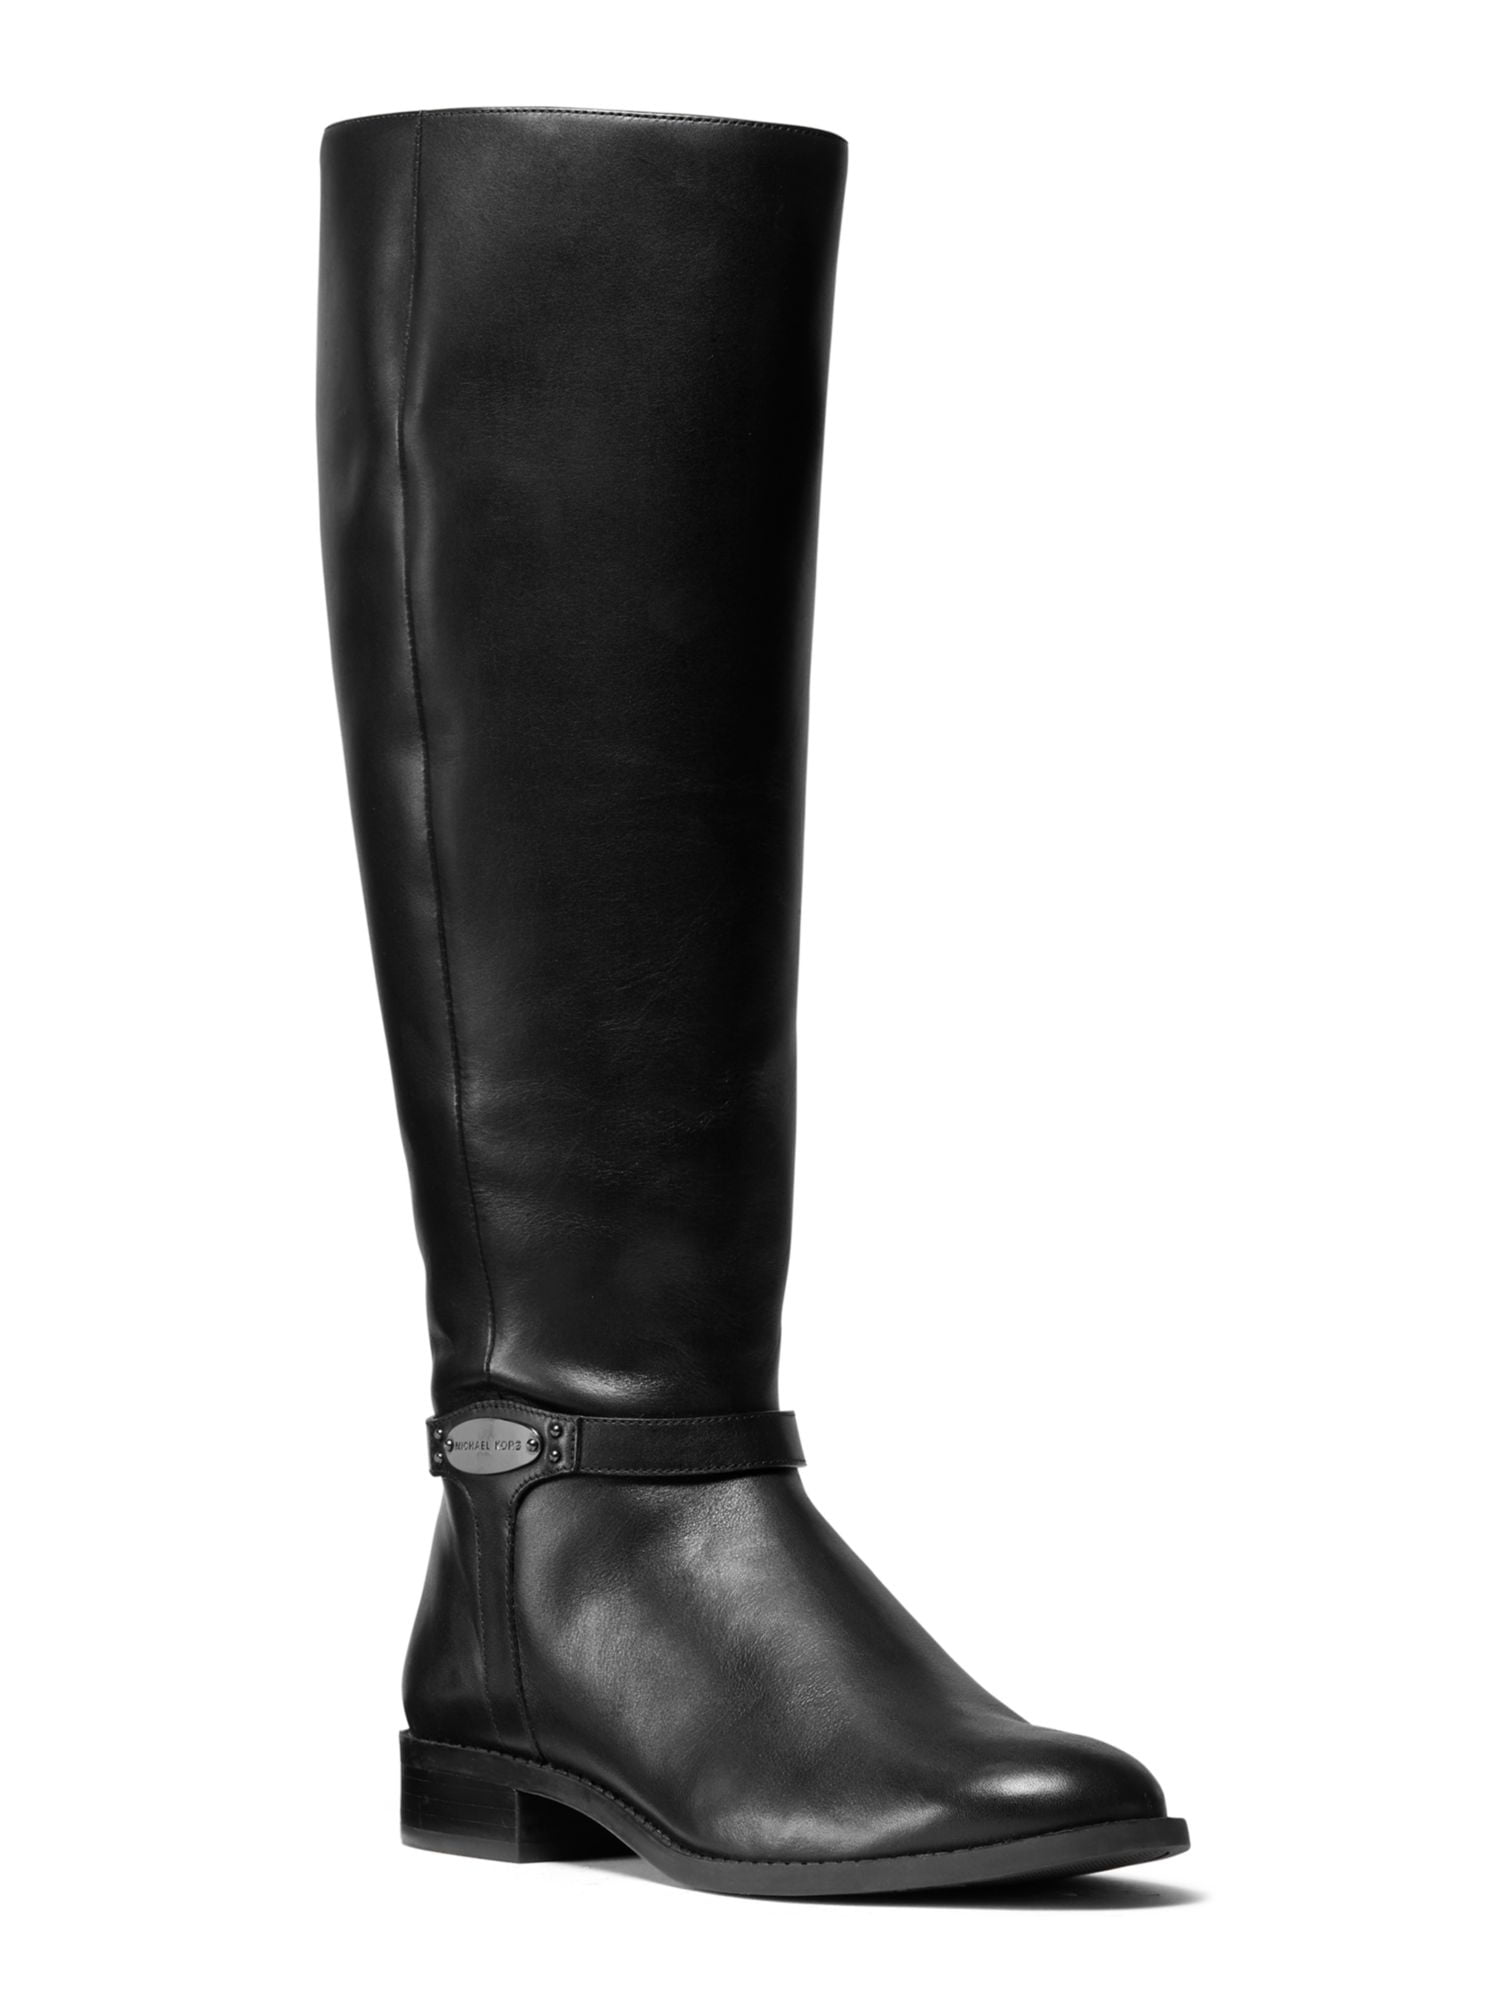 Michael Kors Womens Boots for sale  eBay